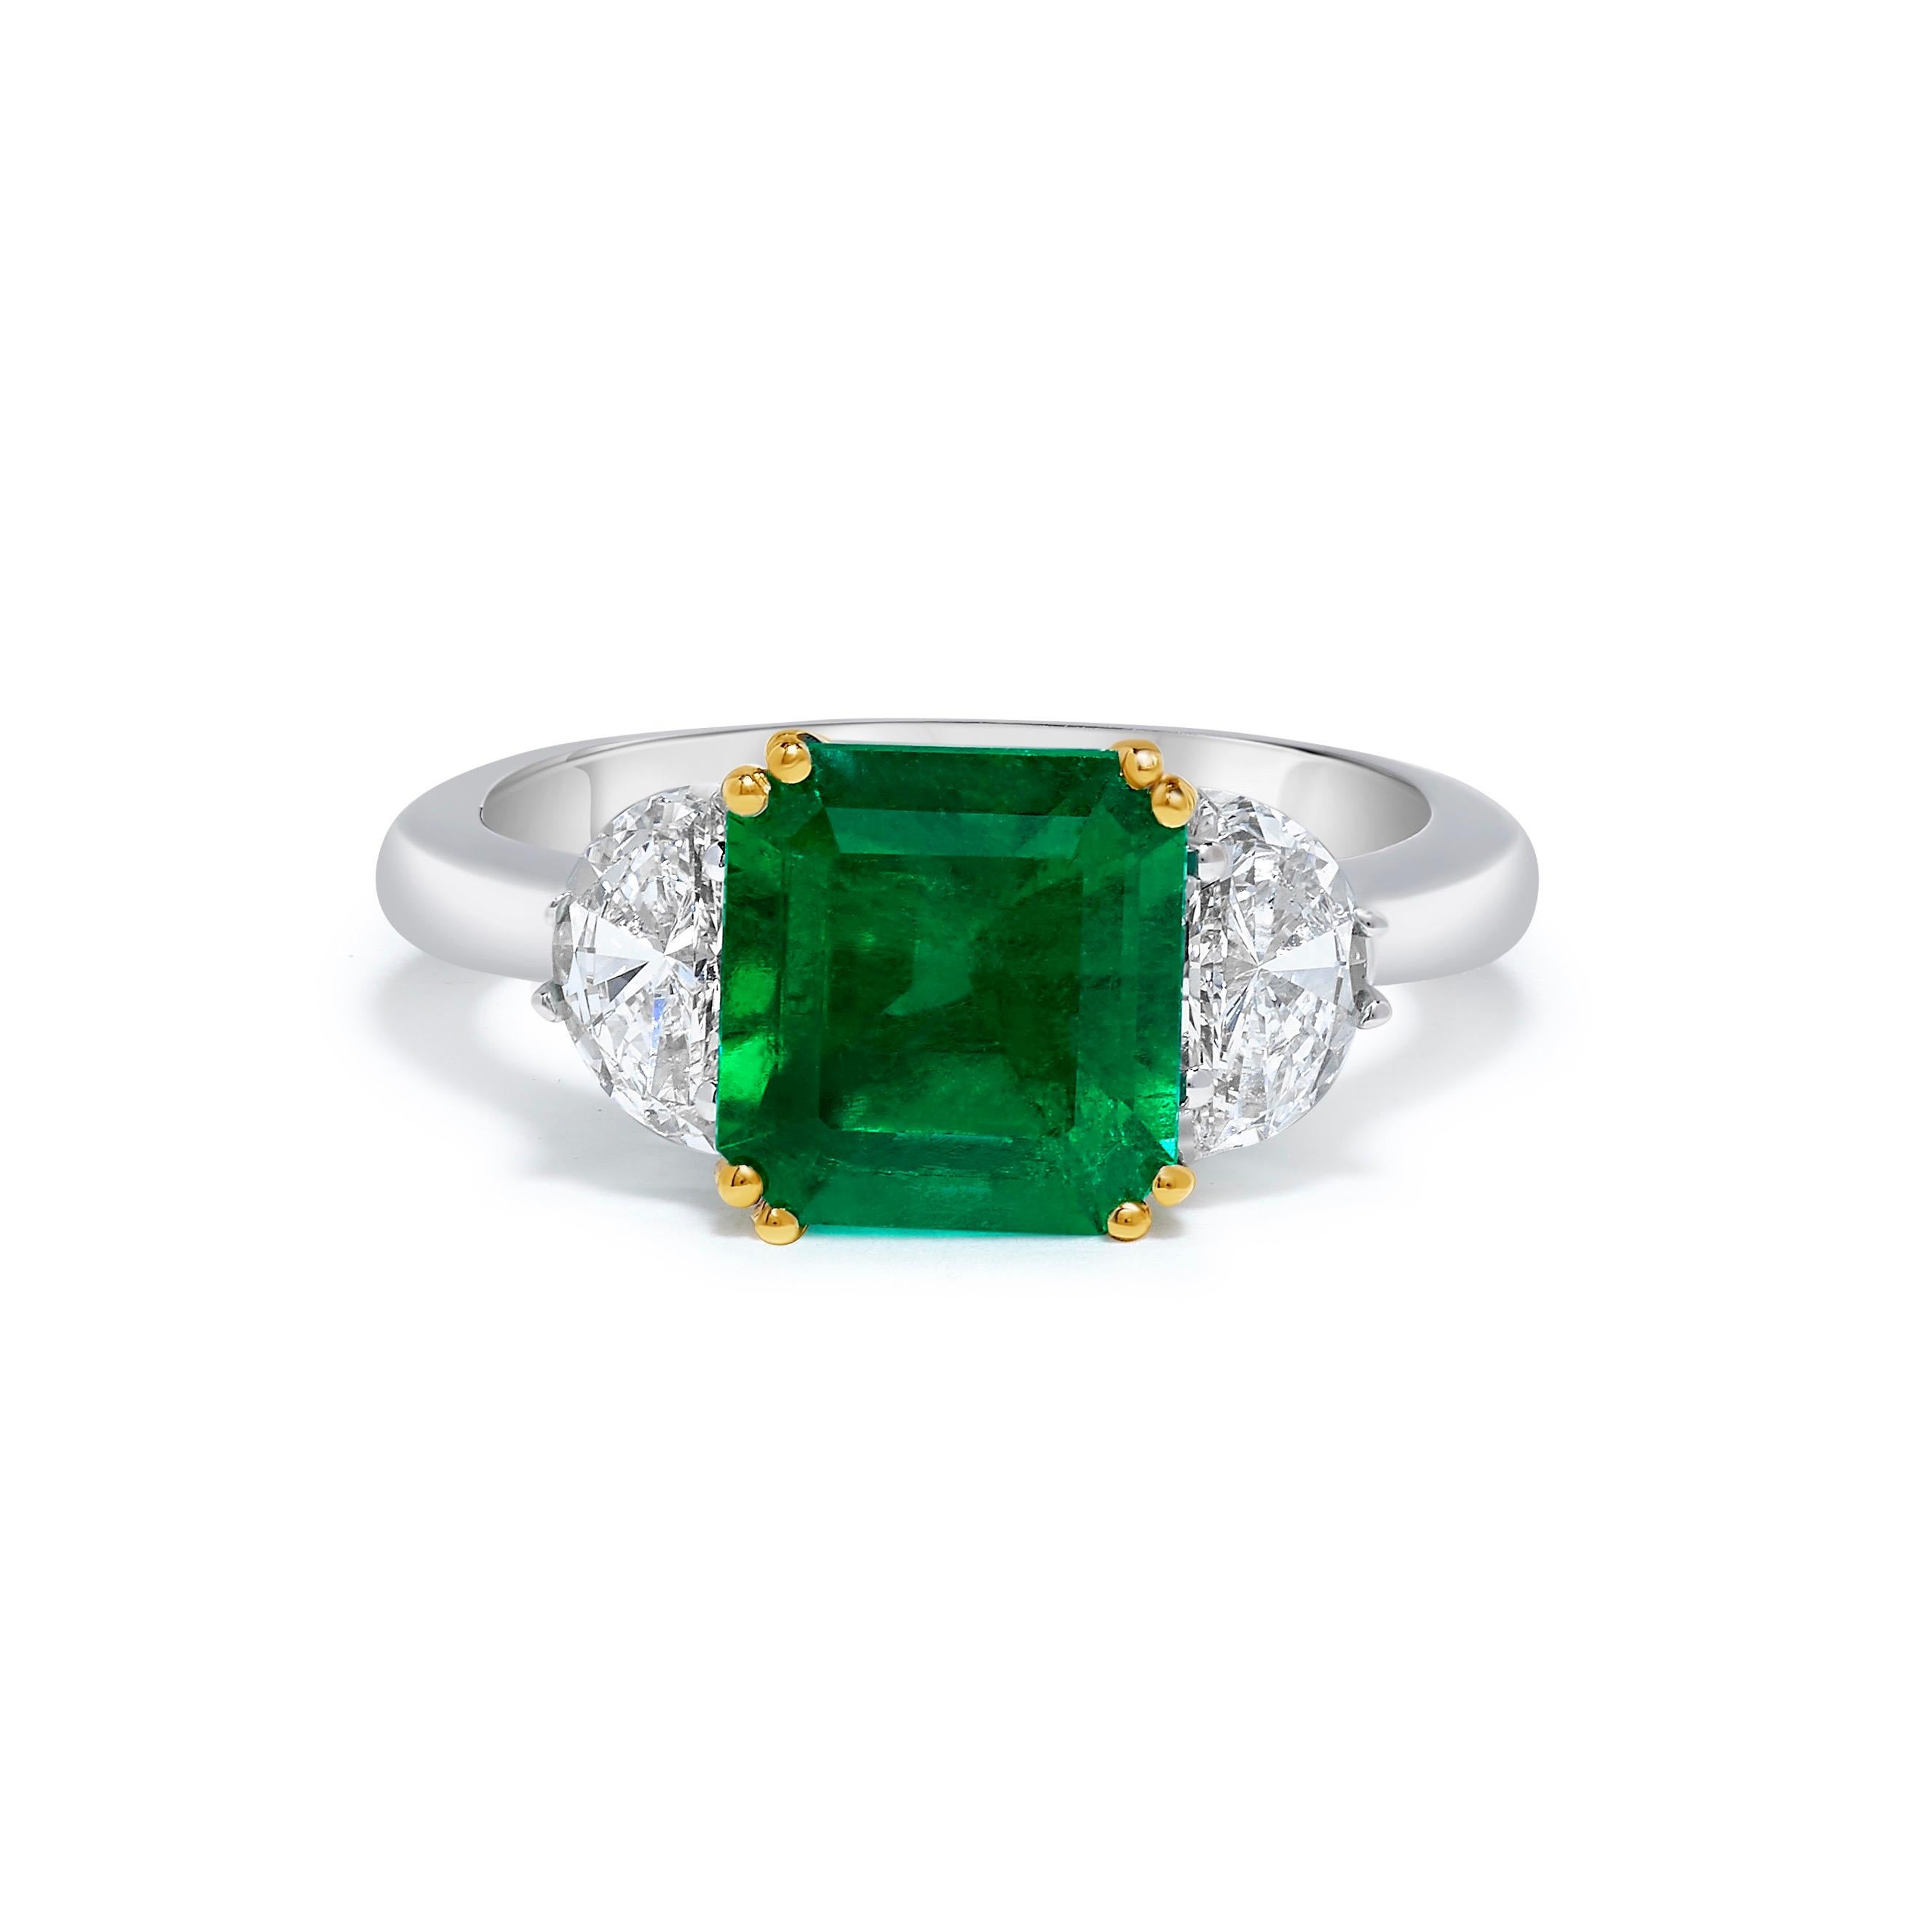 Emerald Cut Emilio Jewelry Certified 3.69 Carat Colombian Emerald Ring For Sale